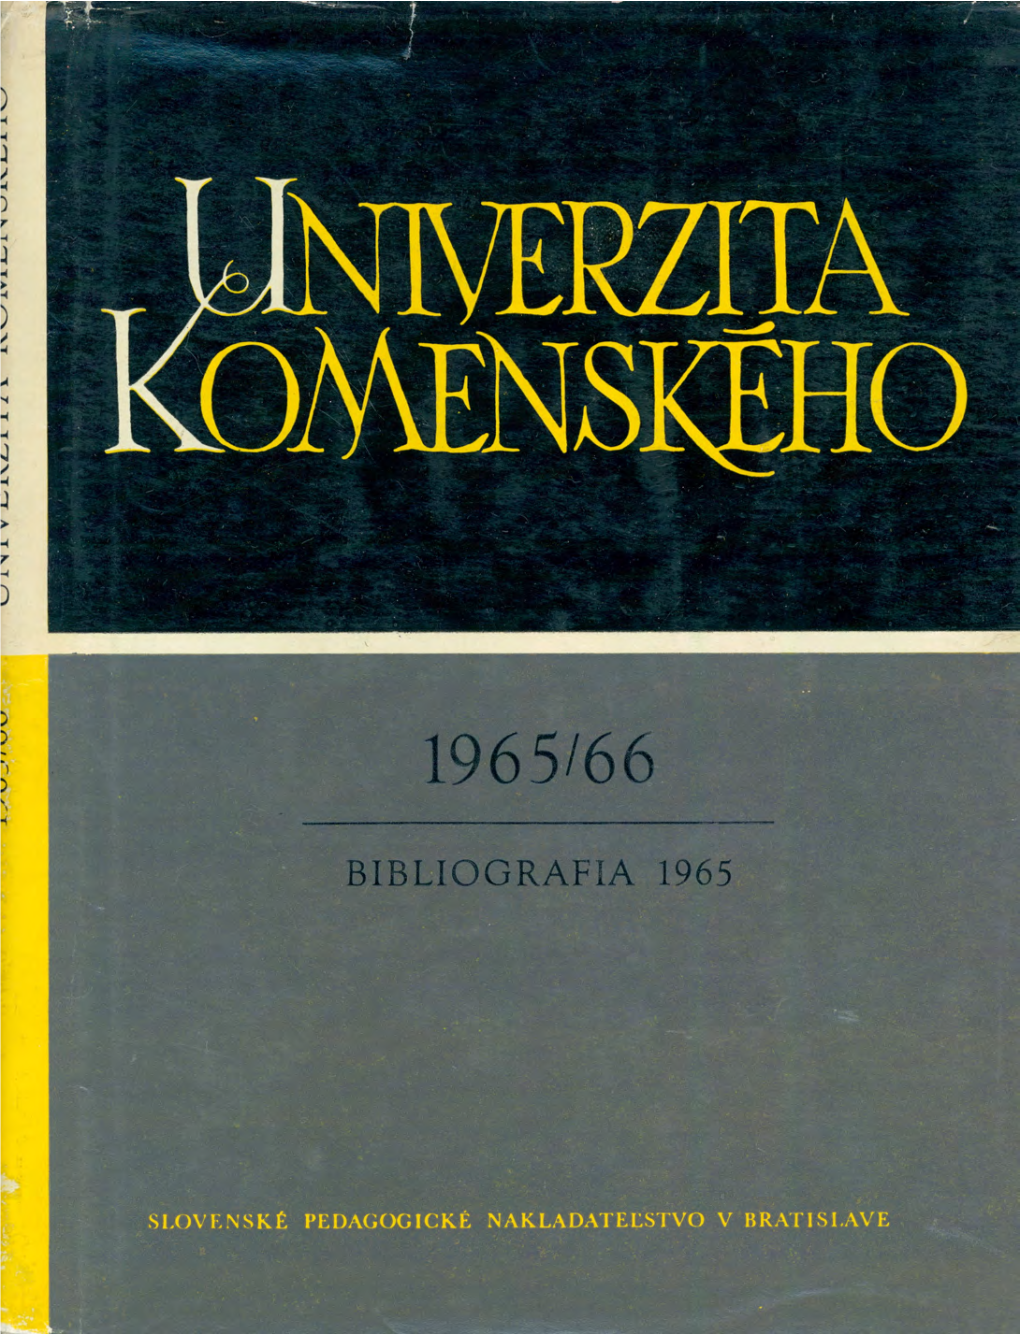 Bibliografia 1965